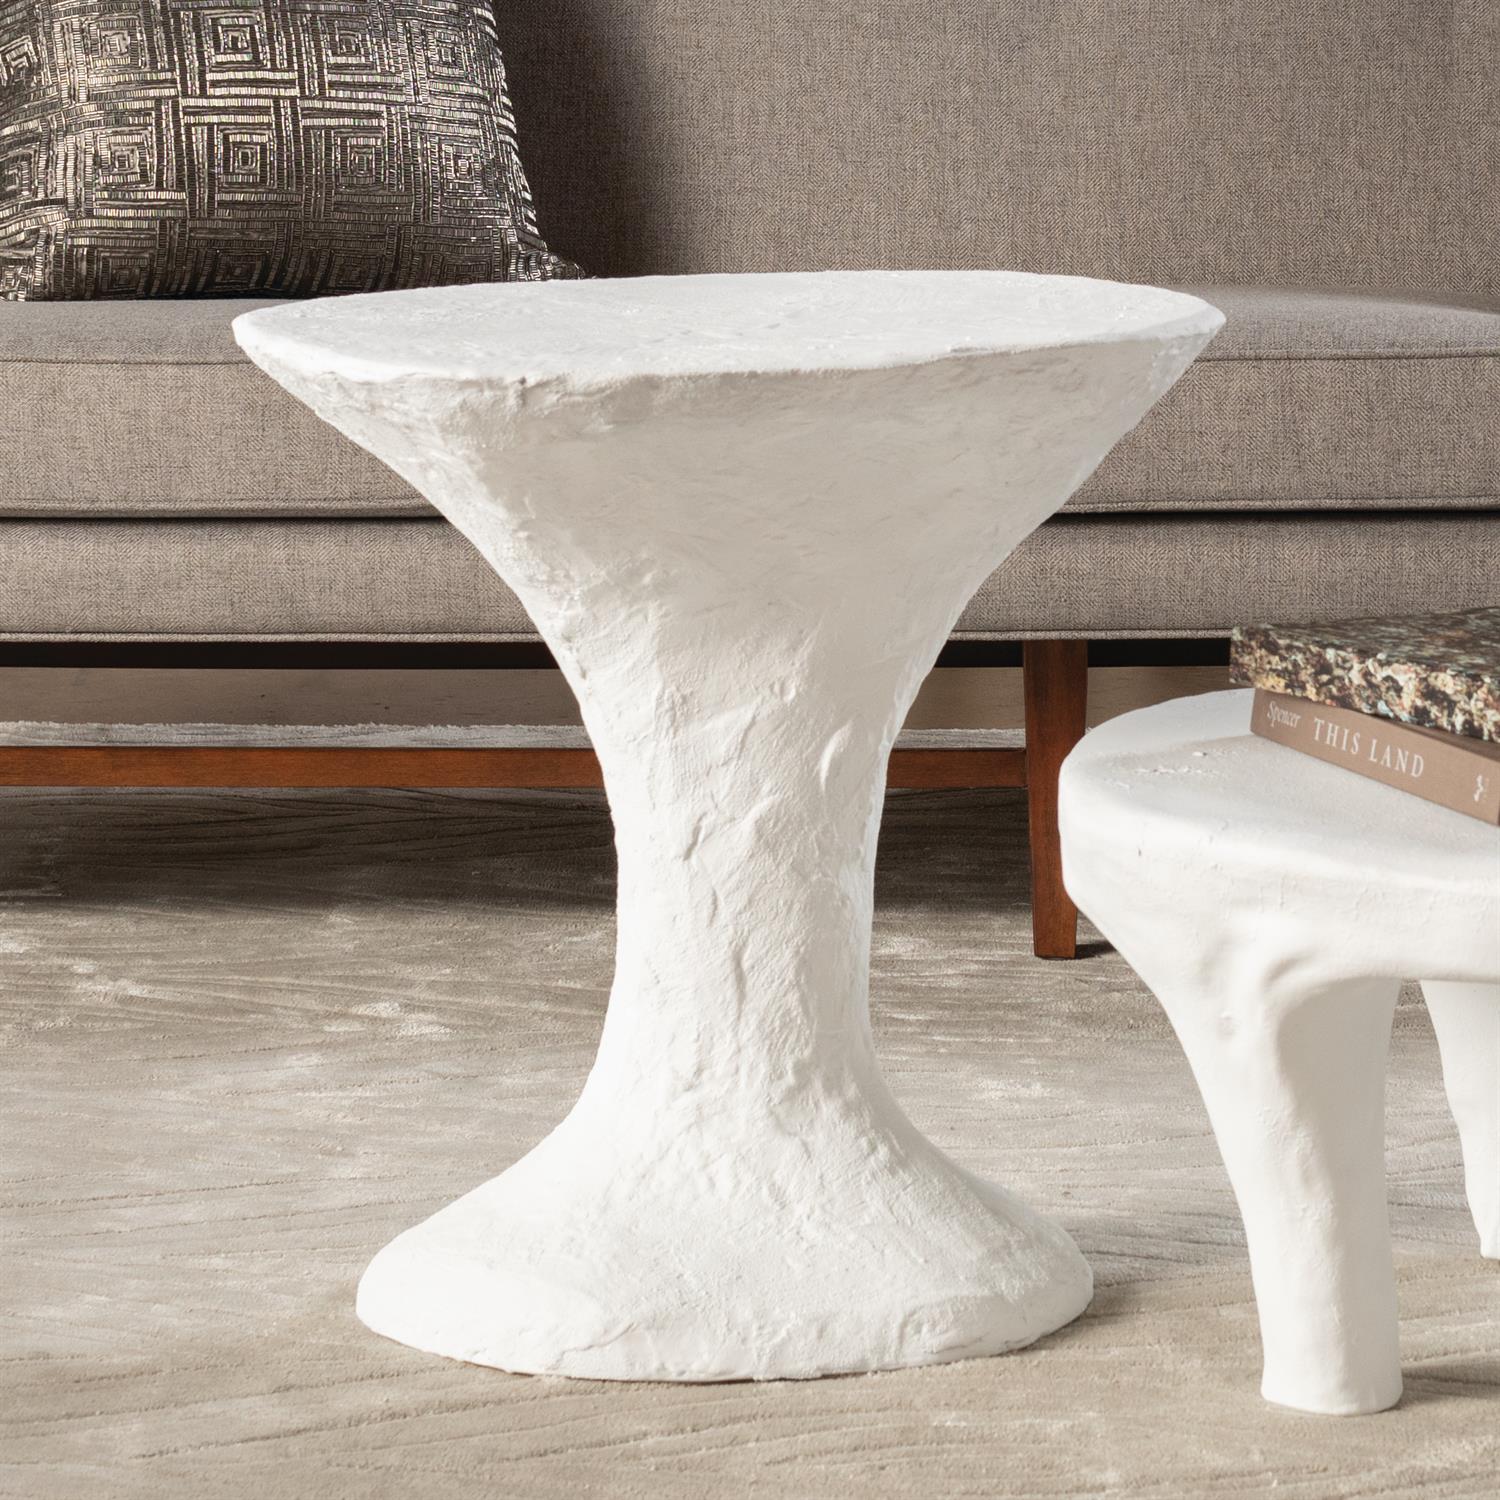 Primitive Accent Table - Soft White - Grats Decor Interior Design & Build Inc.